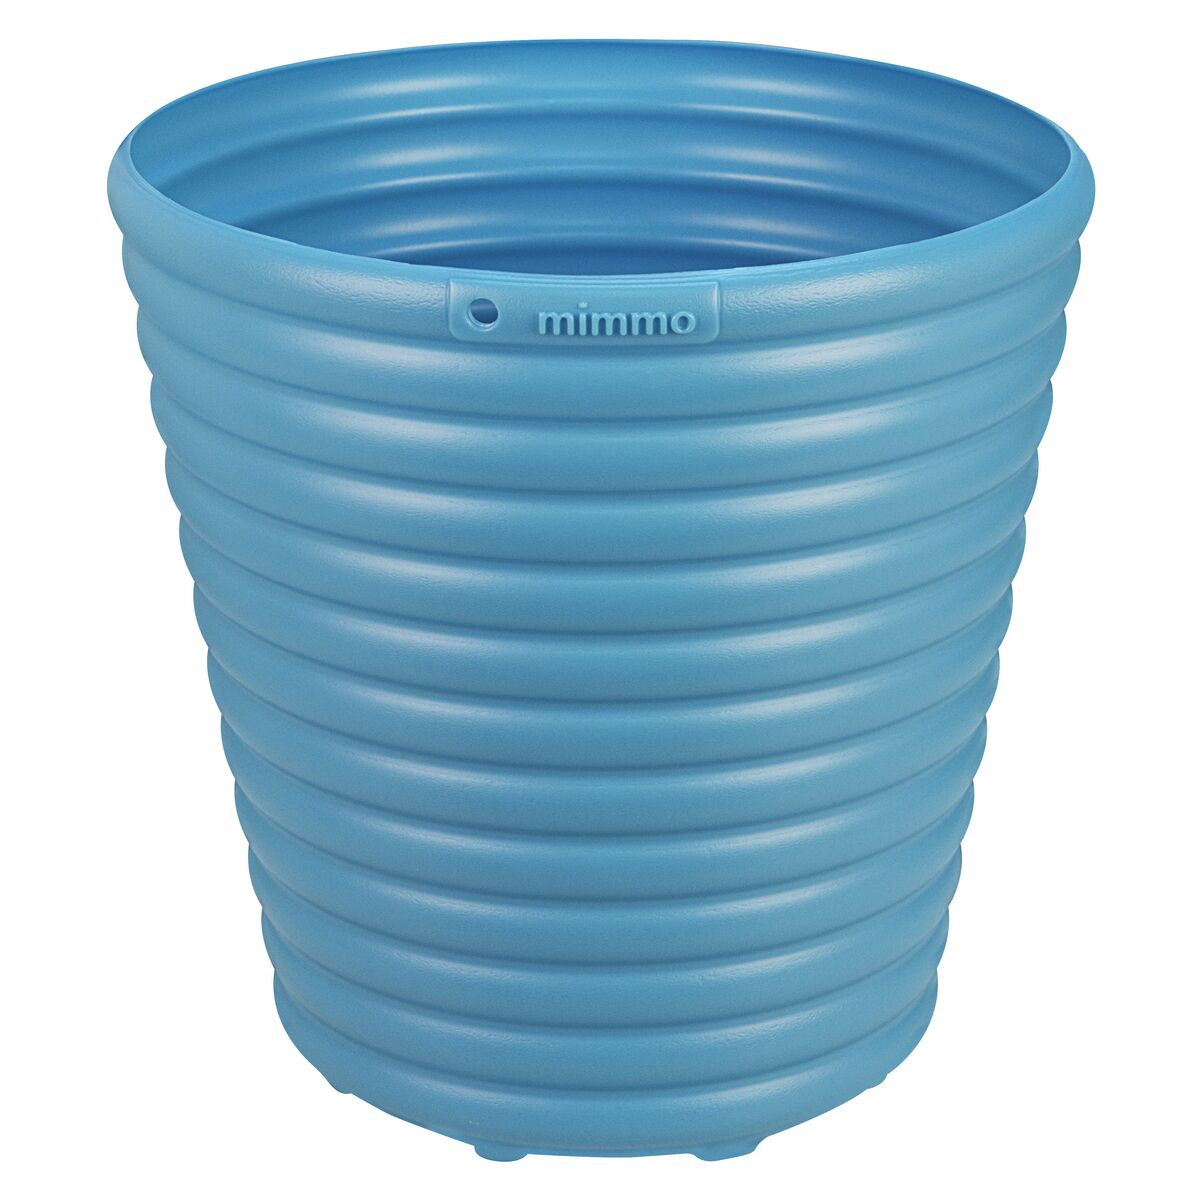 Cachepô Vaso Tramontina Mimmo em Plástico Azul 5,5 L